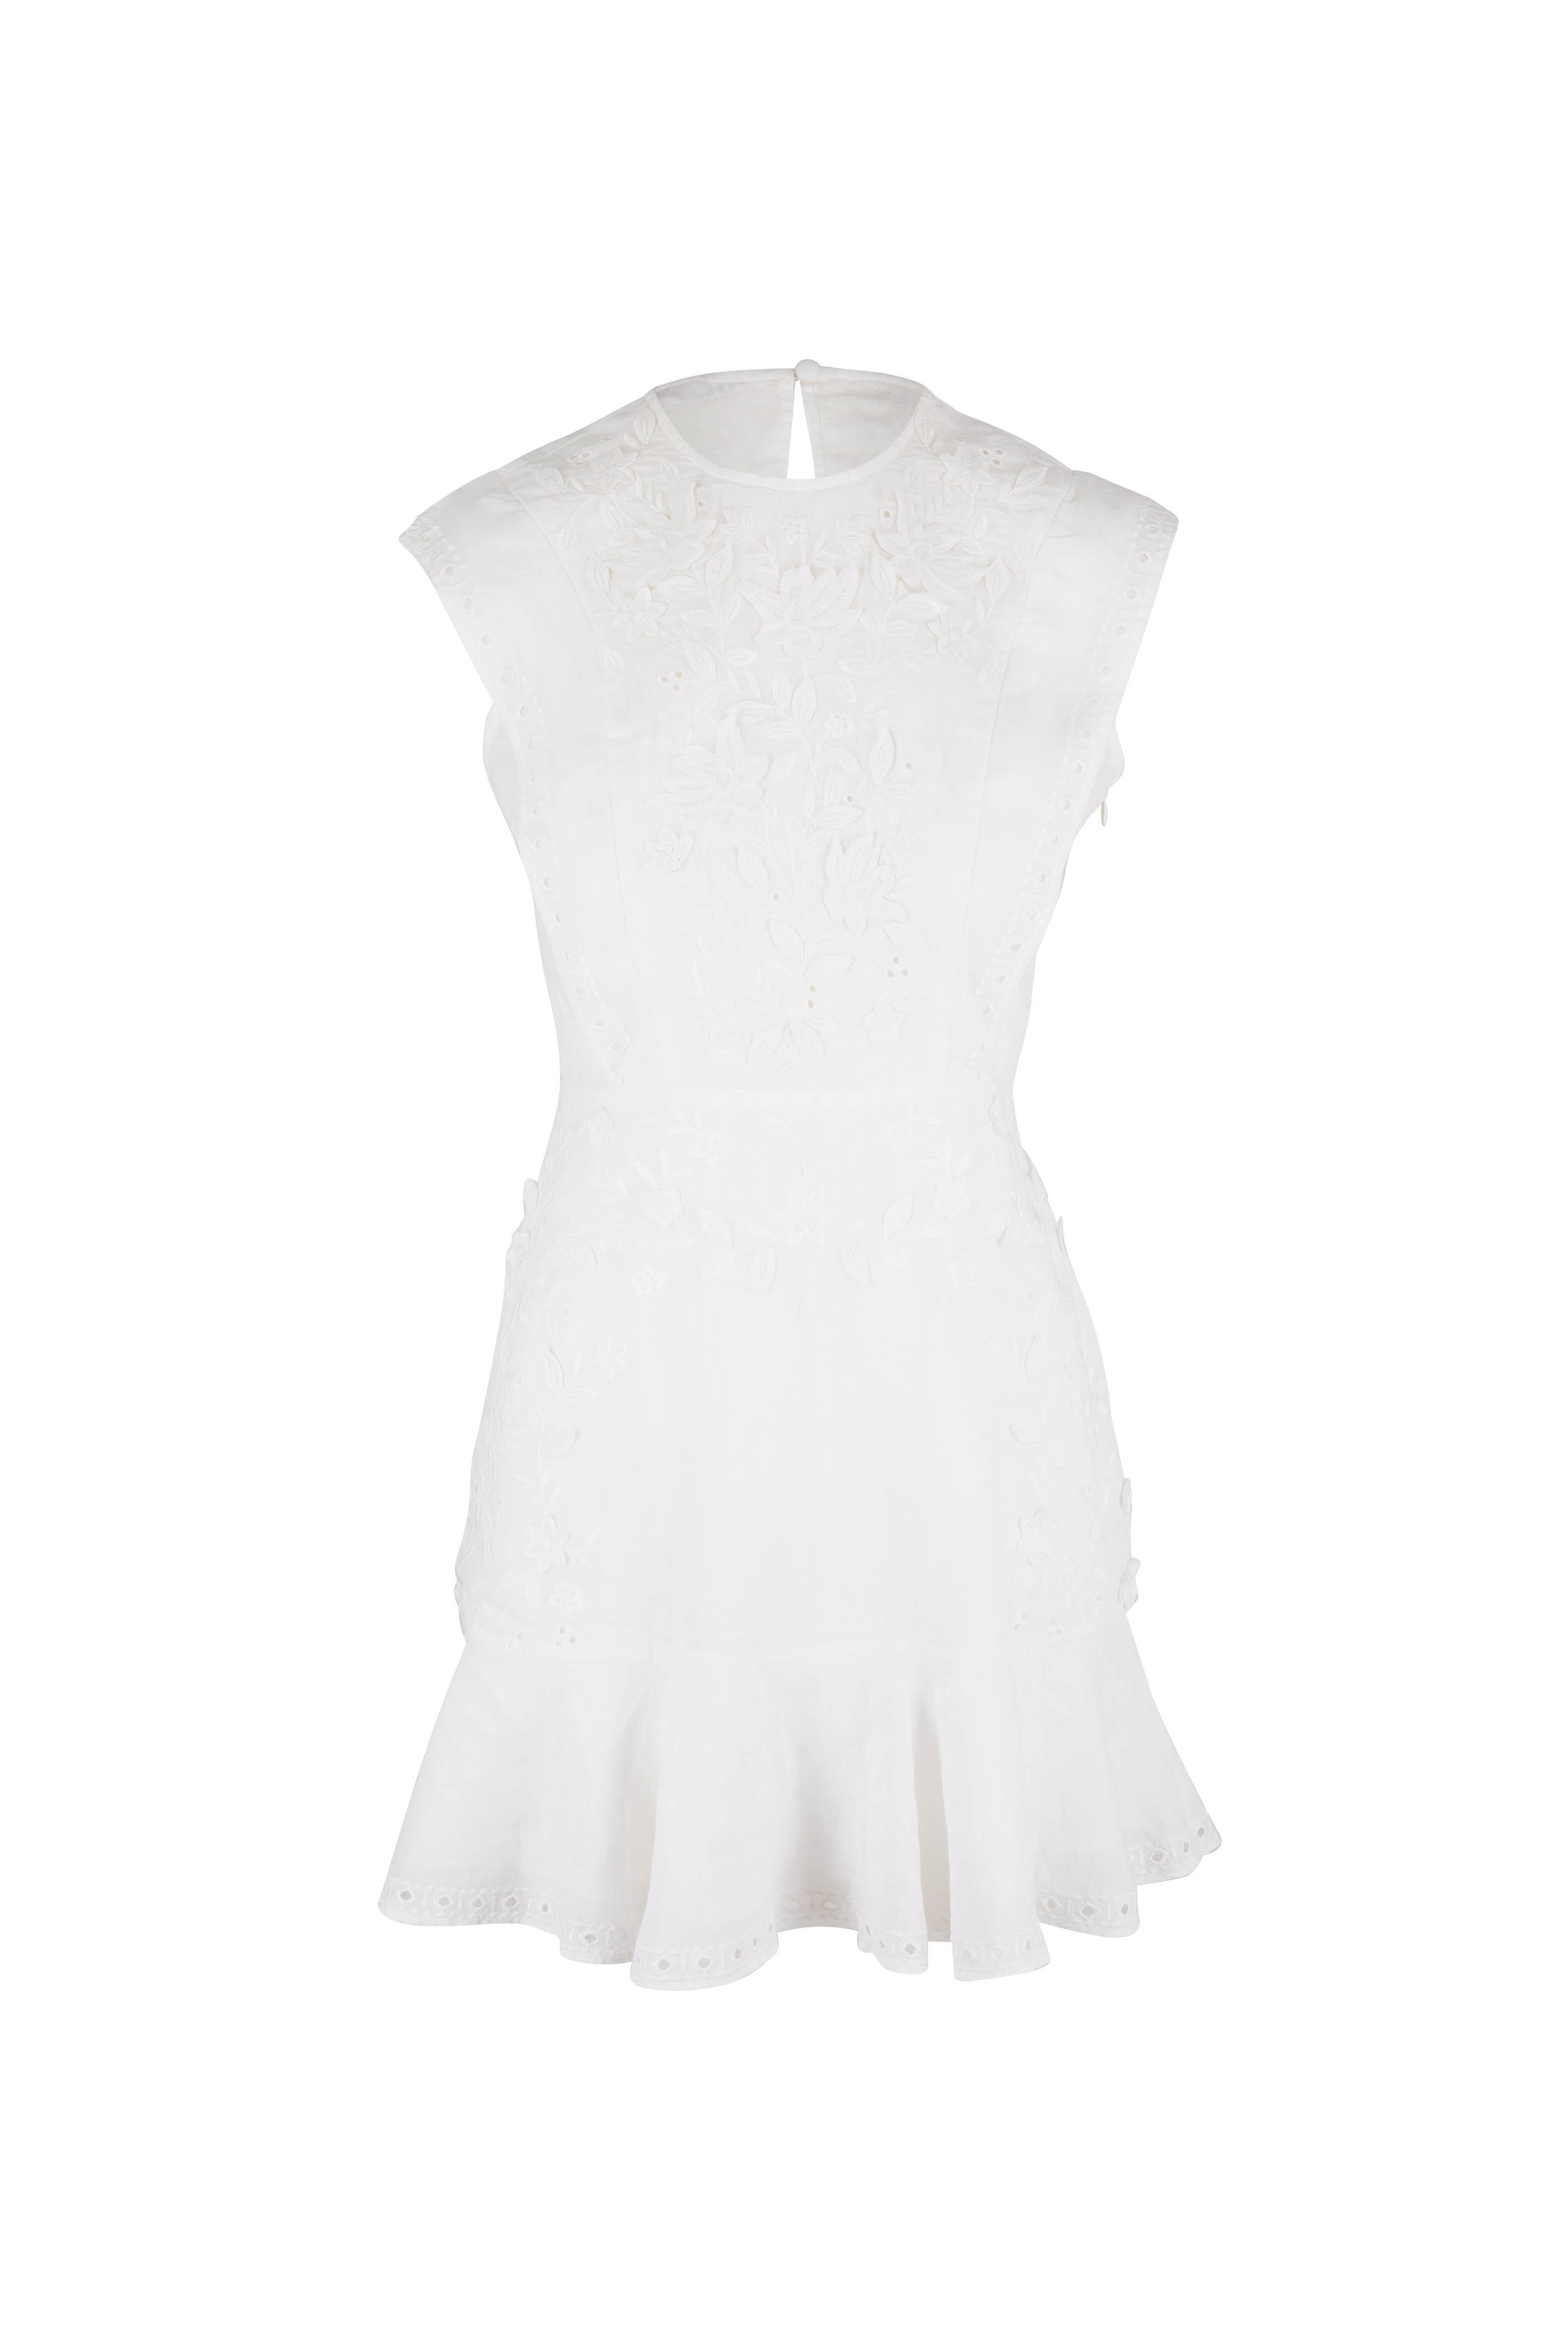 Kerison White Embroidered Mini Dress